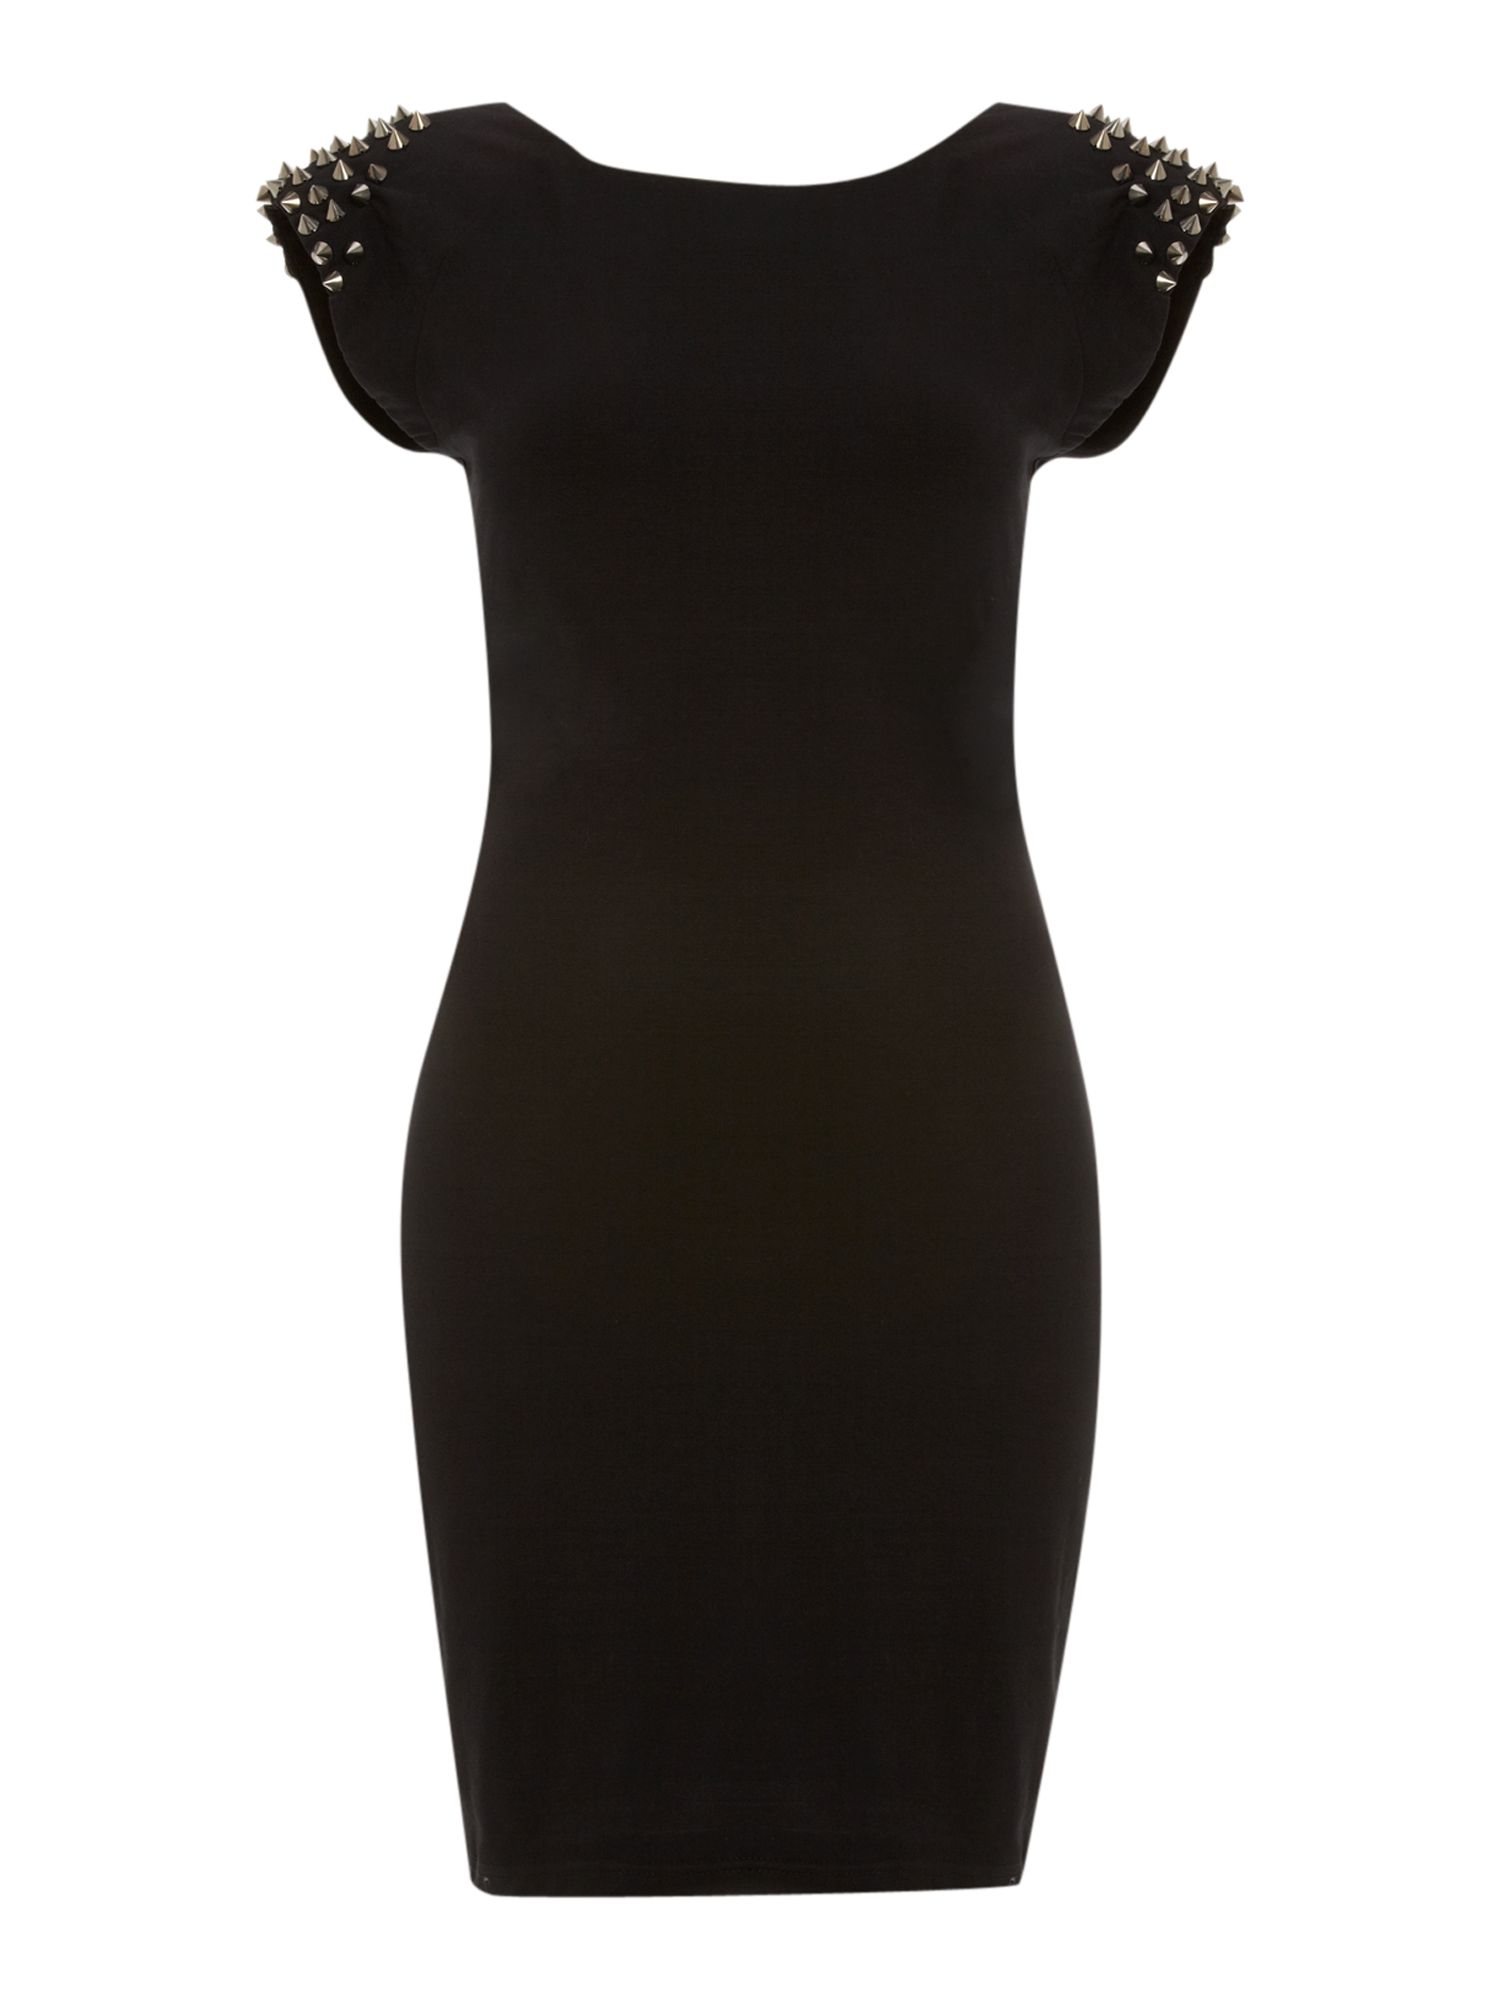 Ax Paris Studded Bodycon Dress in Black | Lyst